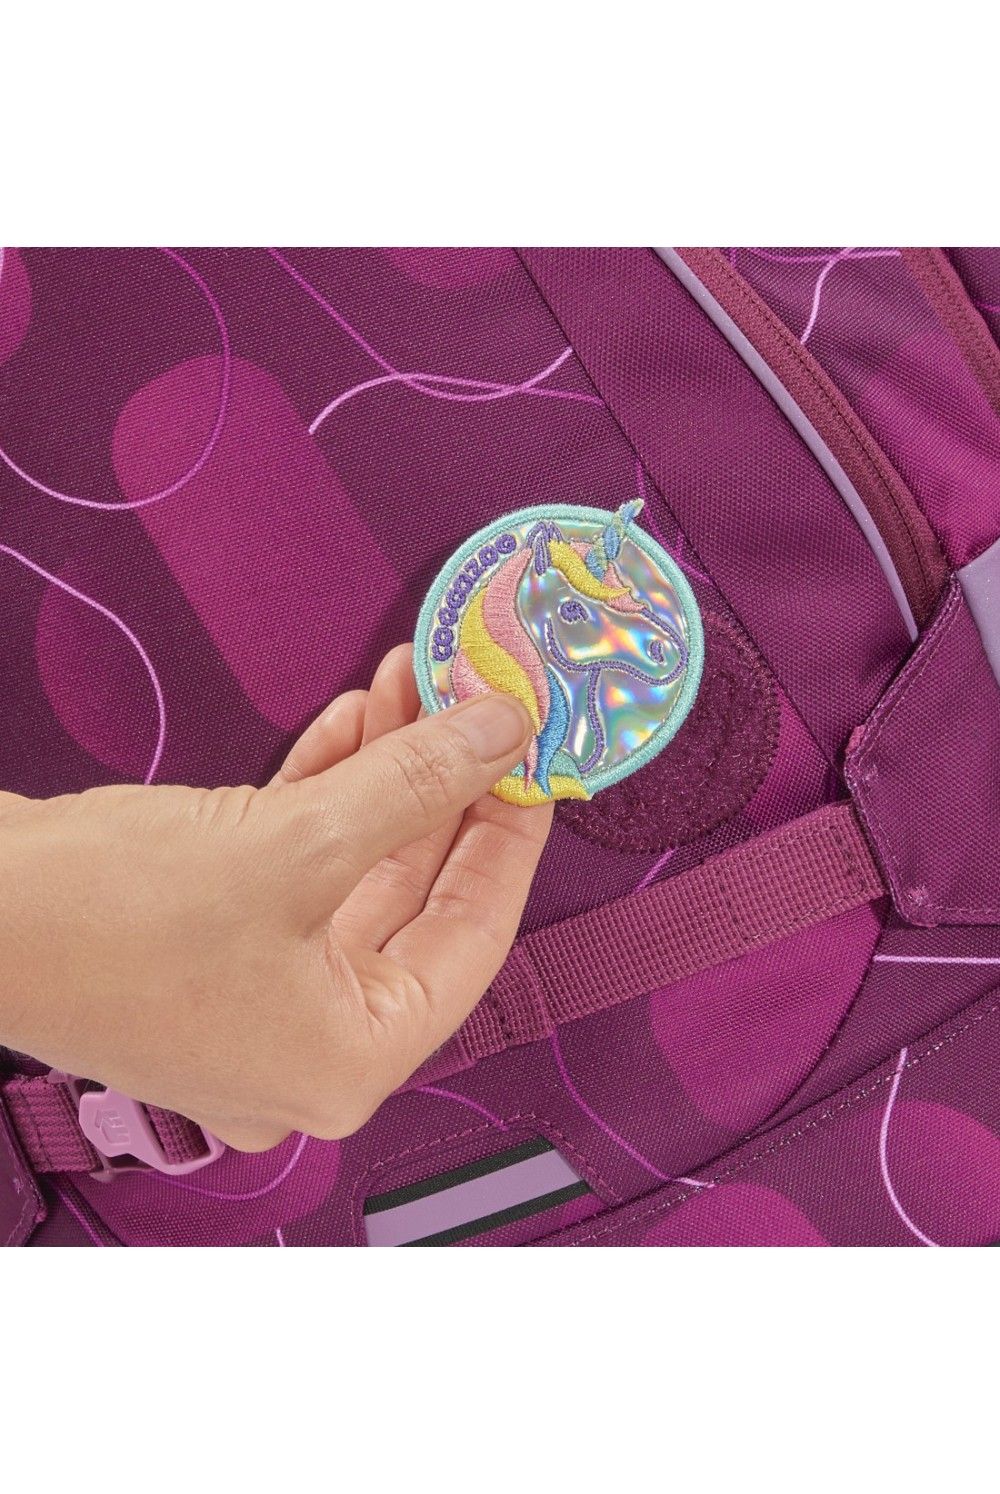 School backpack Coocazoo Joker Berry Bubbles